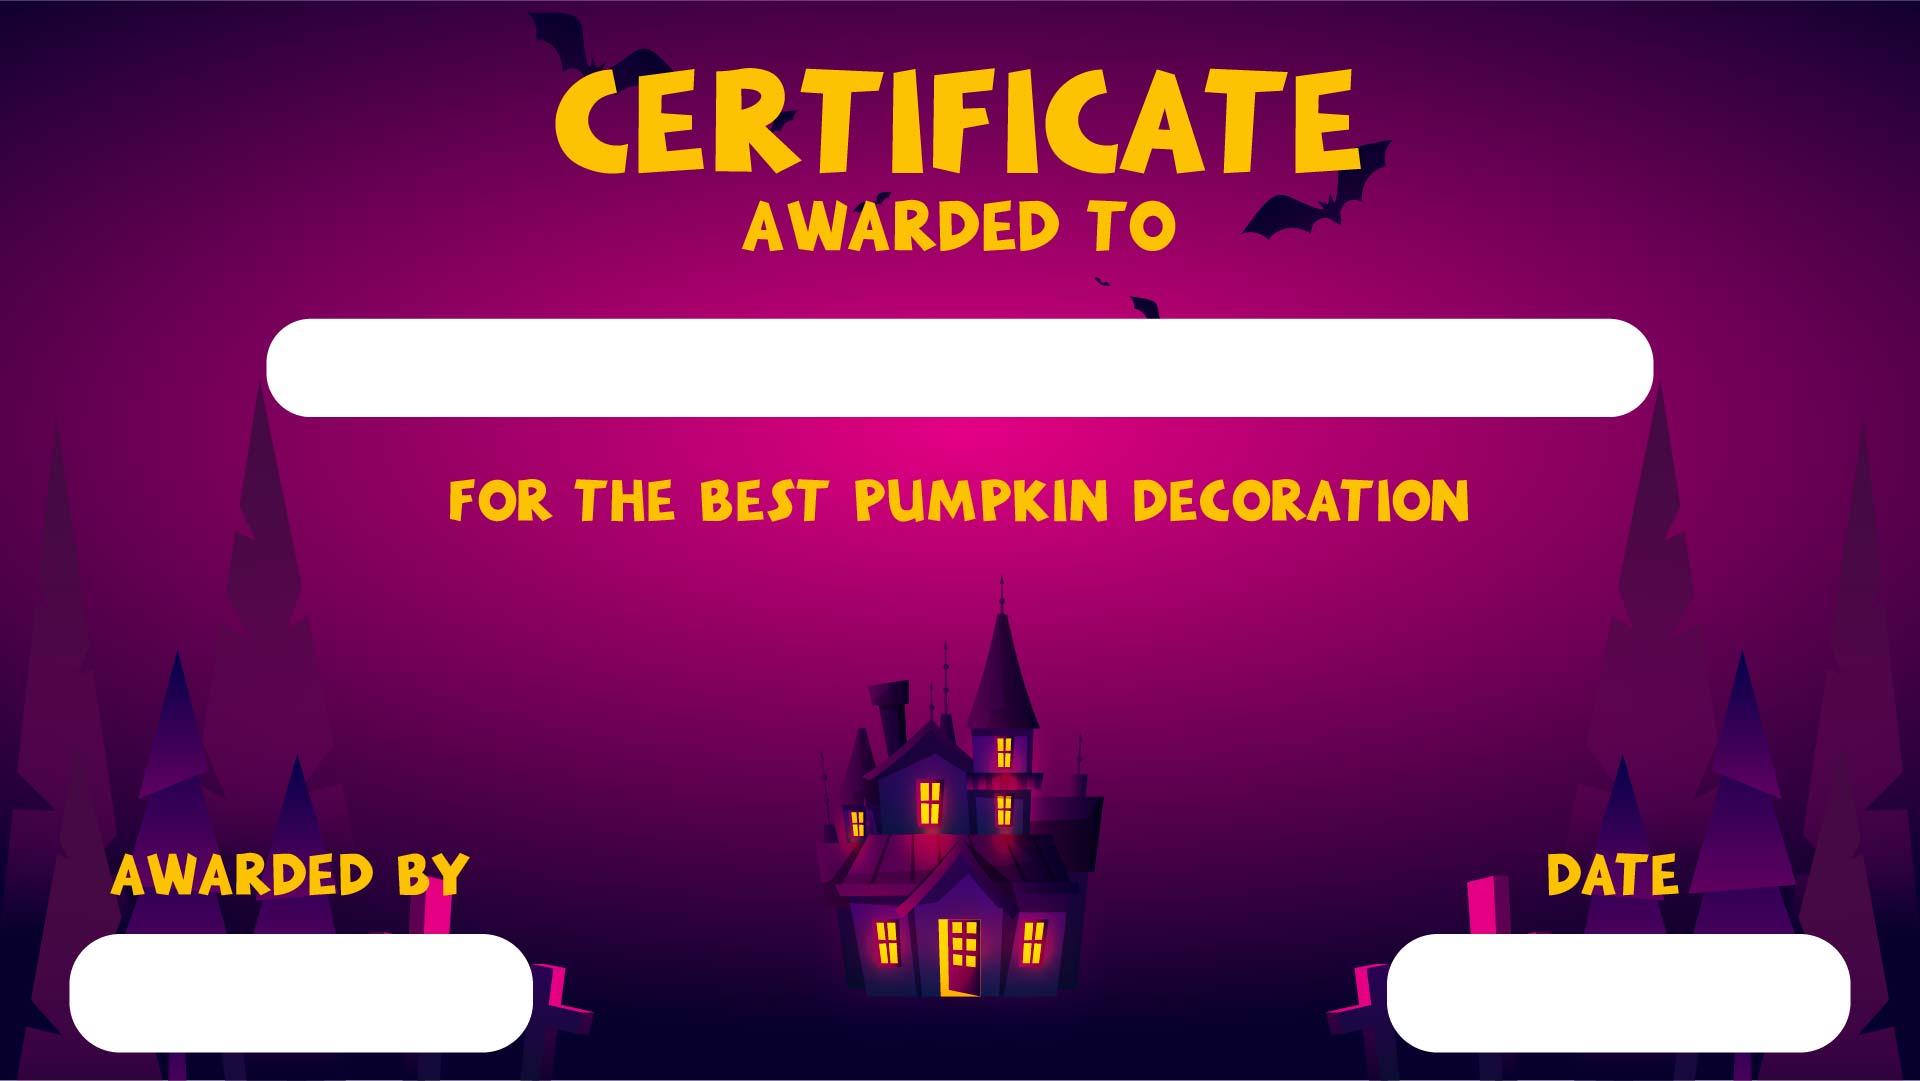 Printable Halloween Award Certificate Pumpkin Decorating Competition